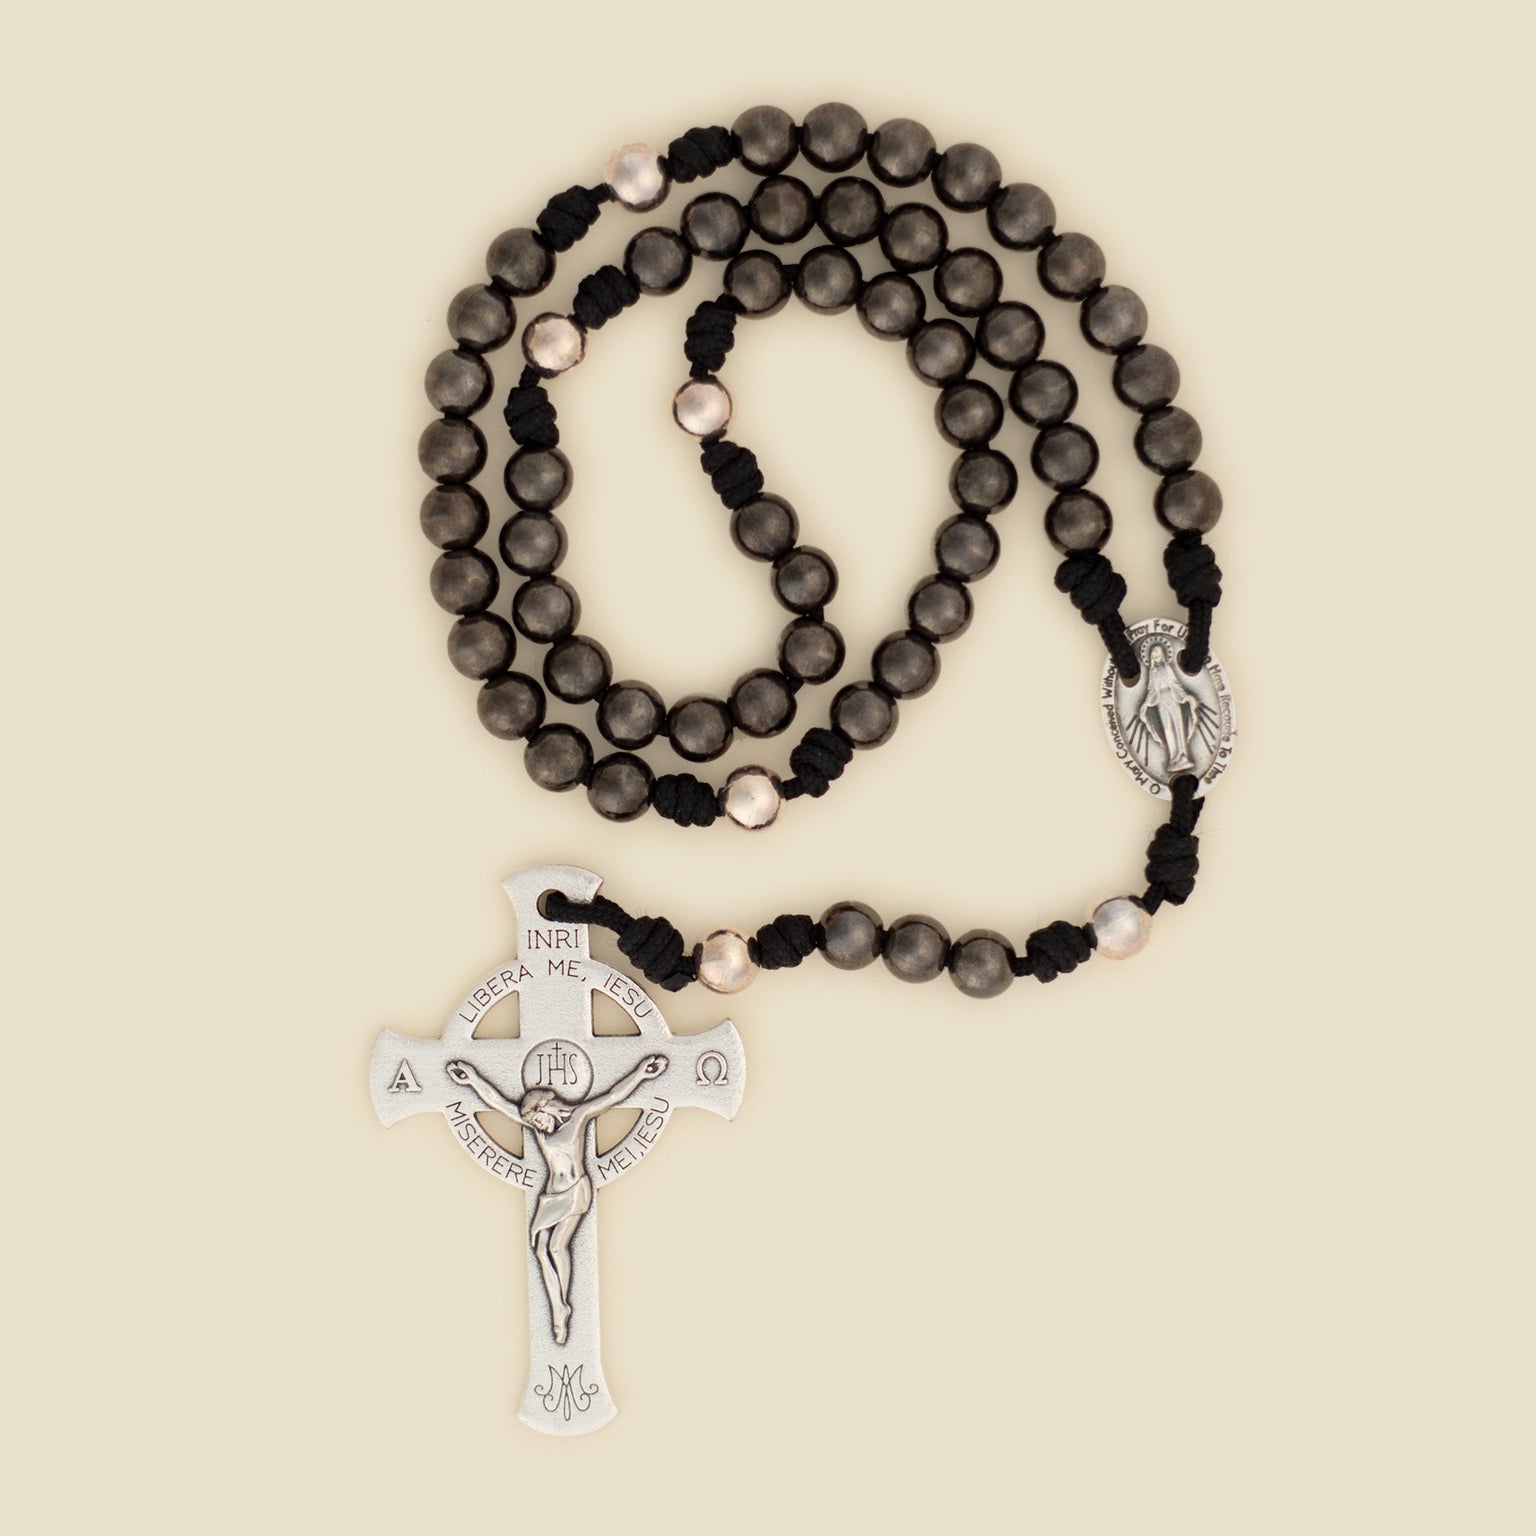 Lifetime Rosaries, Deliverance Cross Rosary, Black/Silver